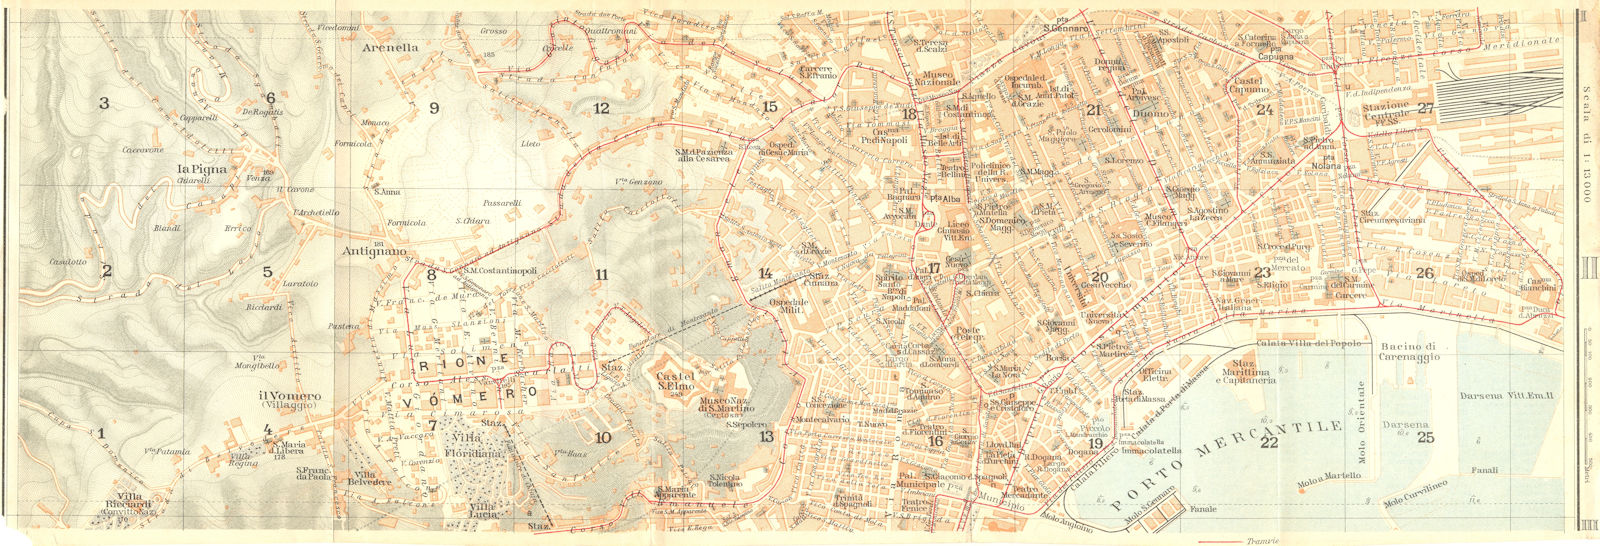 Associate Product ITALY. Napoli section II of III 1925 old vintage map plan chart